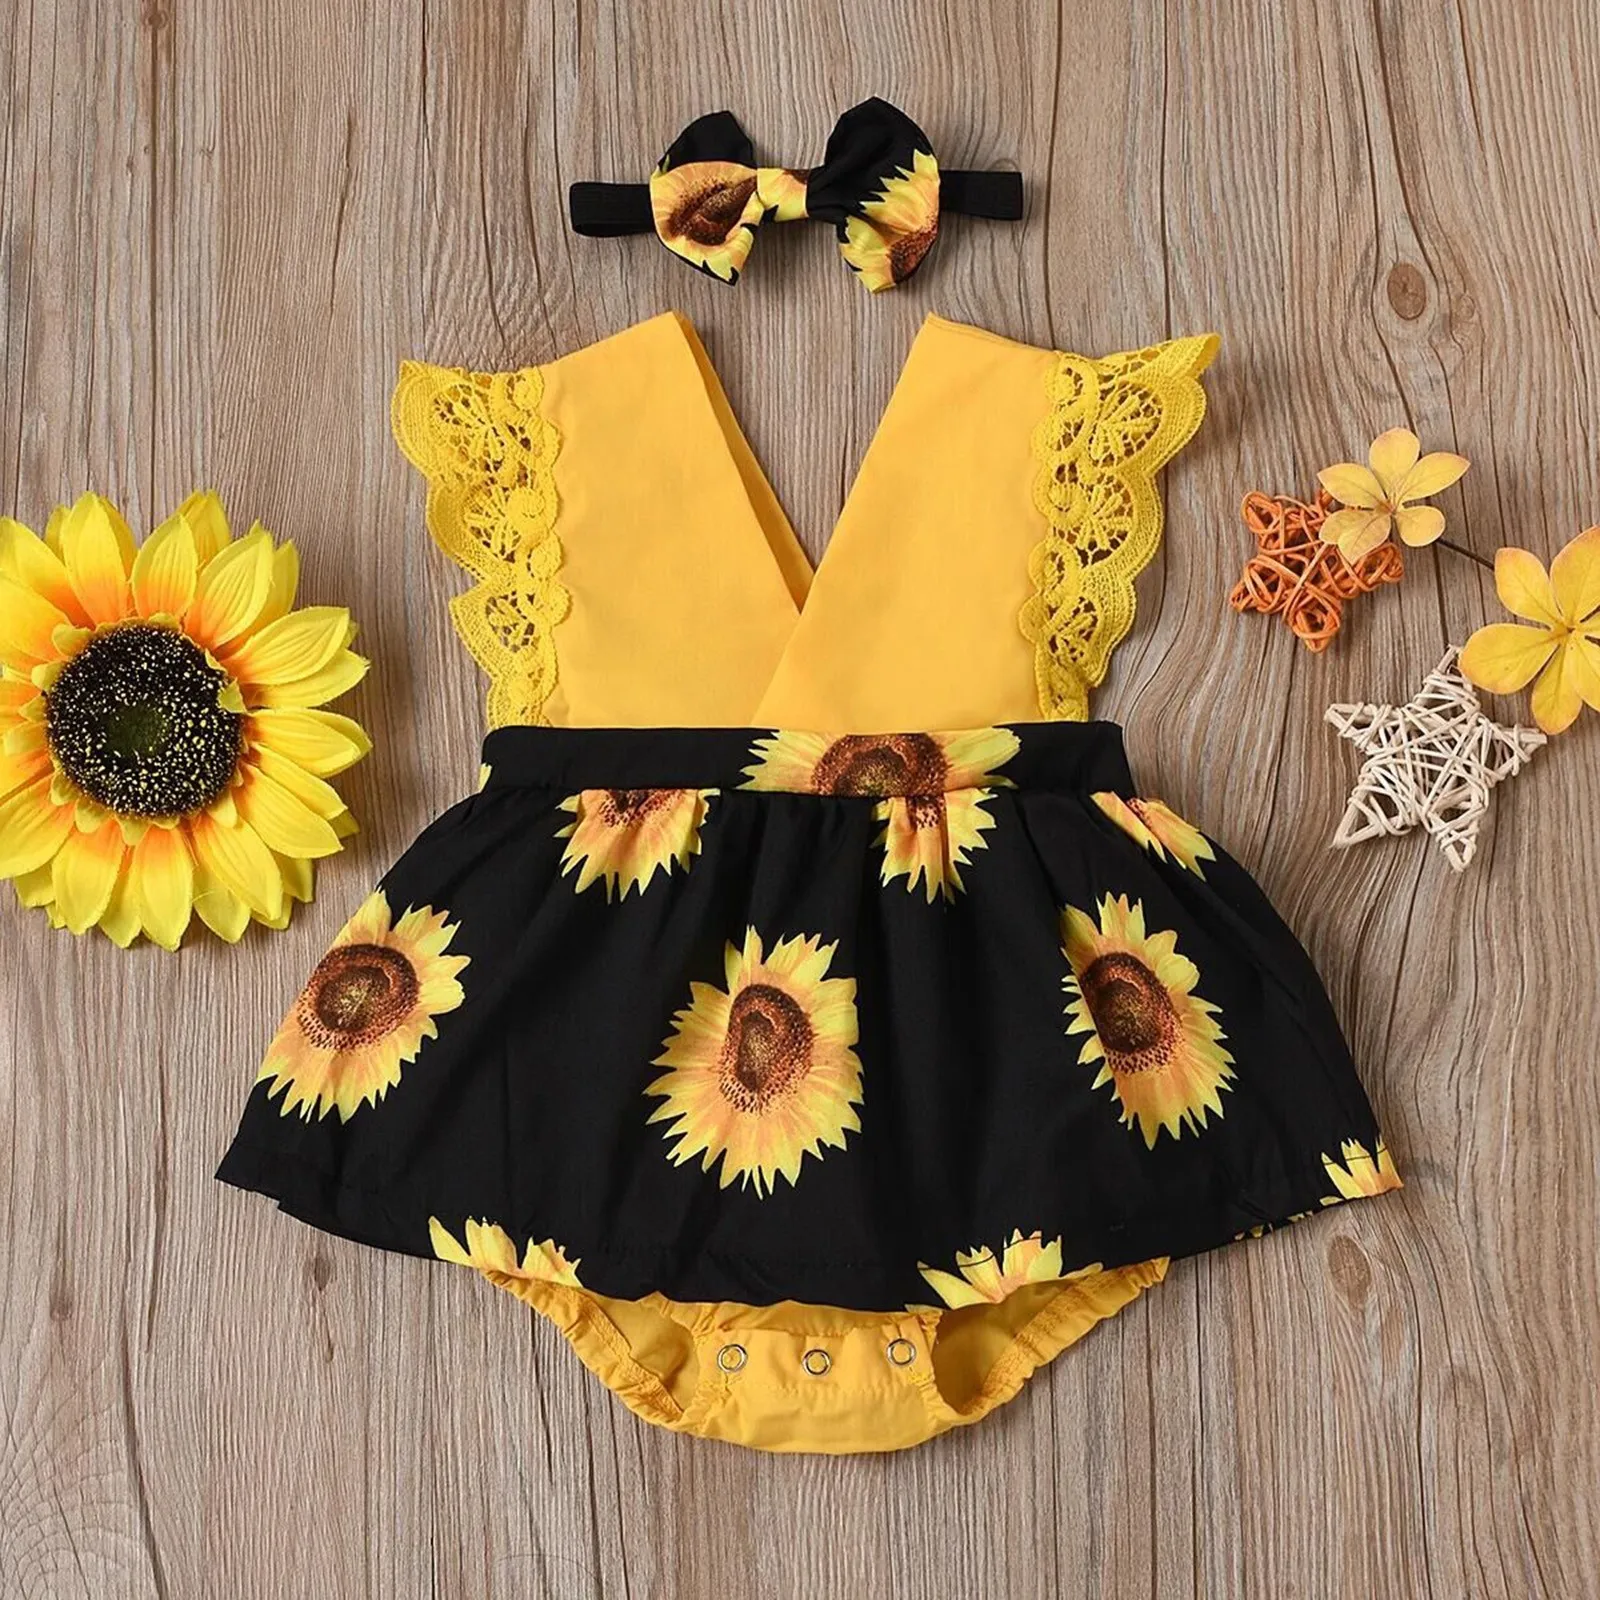 Infant Baby Girls Sleeveless Sunflower Floral Romper Bodysuit Sunsuit Clothes 